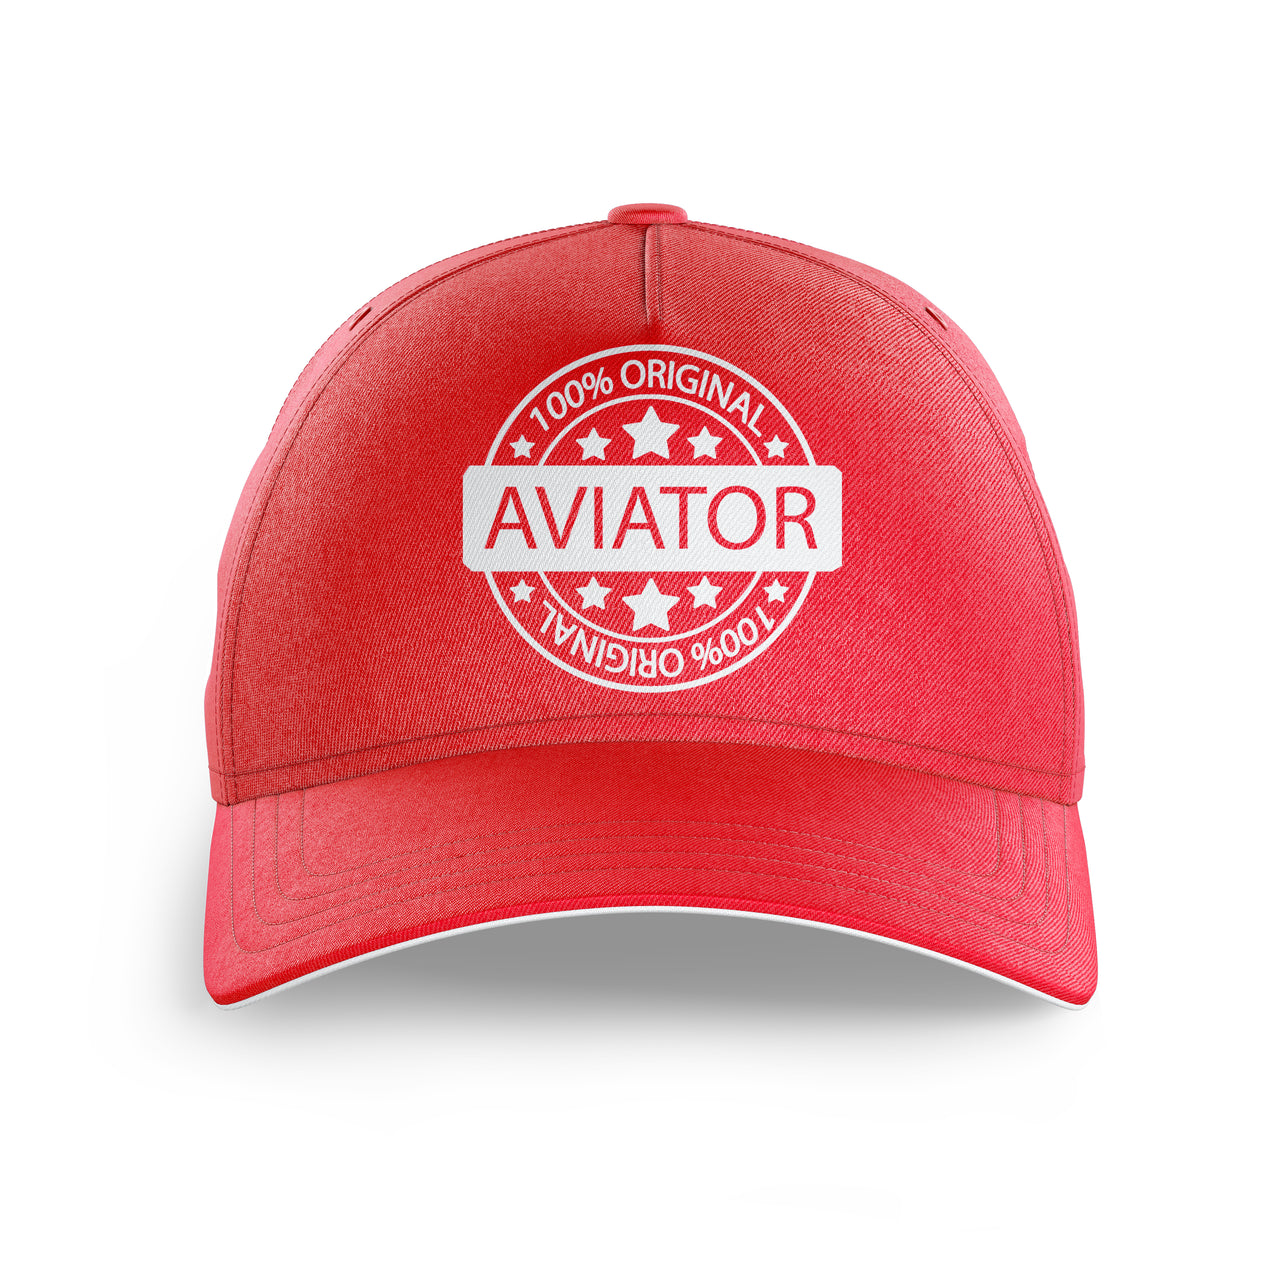 100 Original Aviator Printed Hats